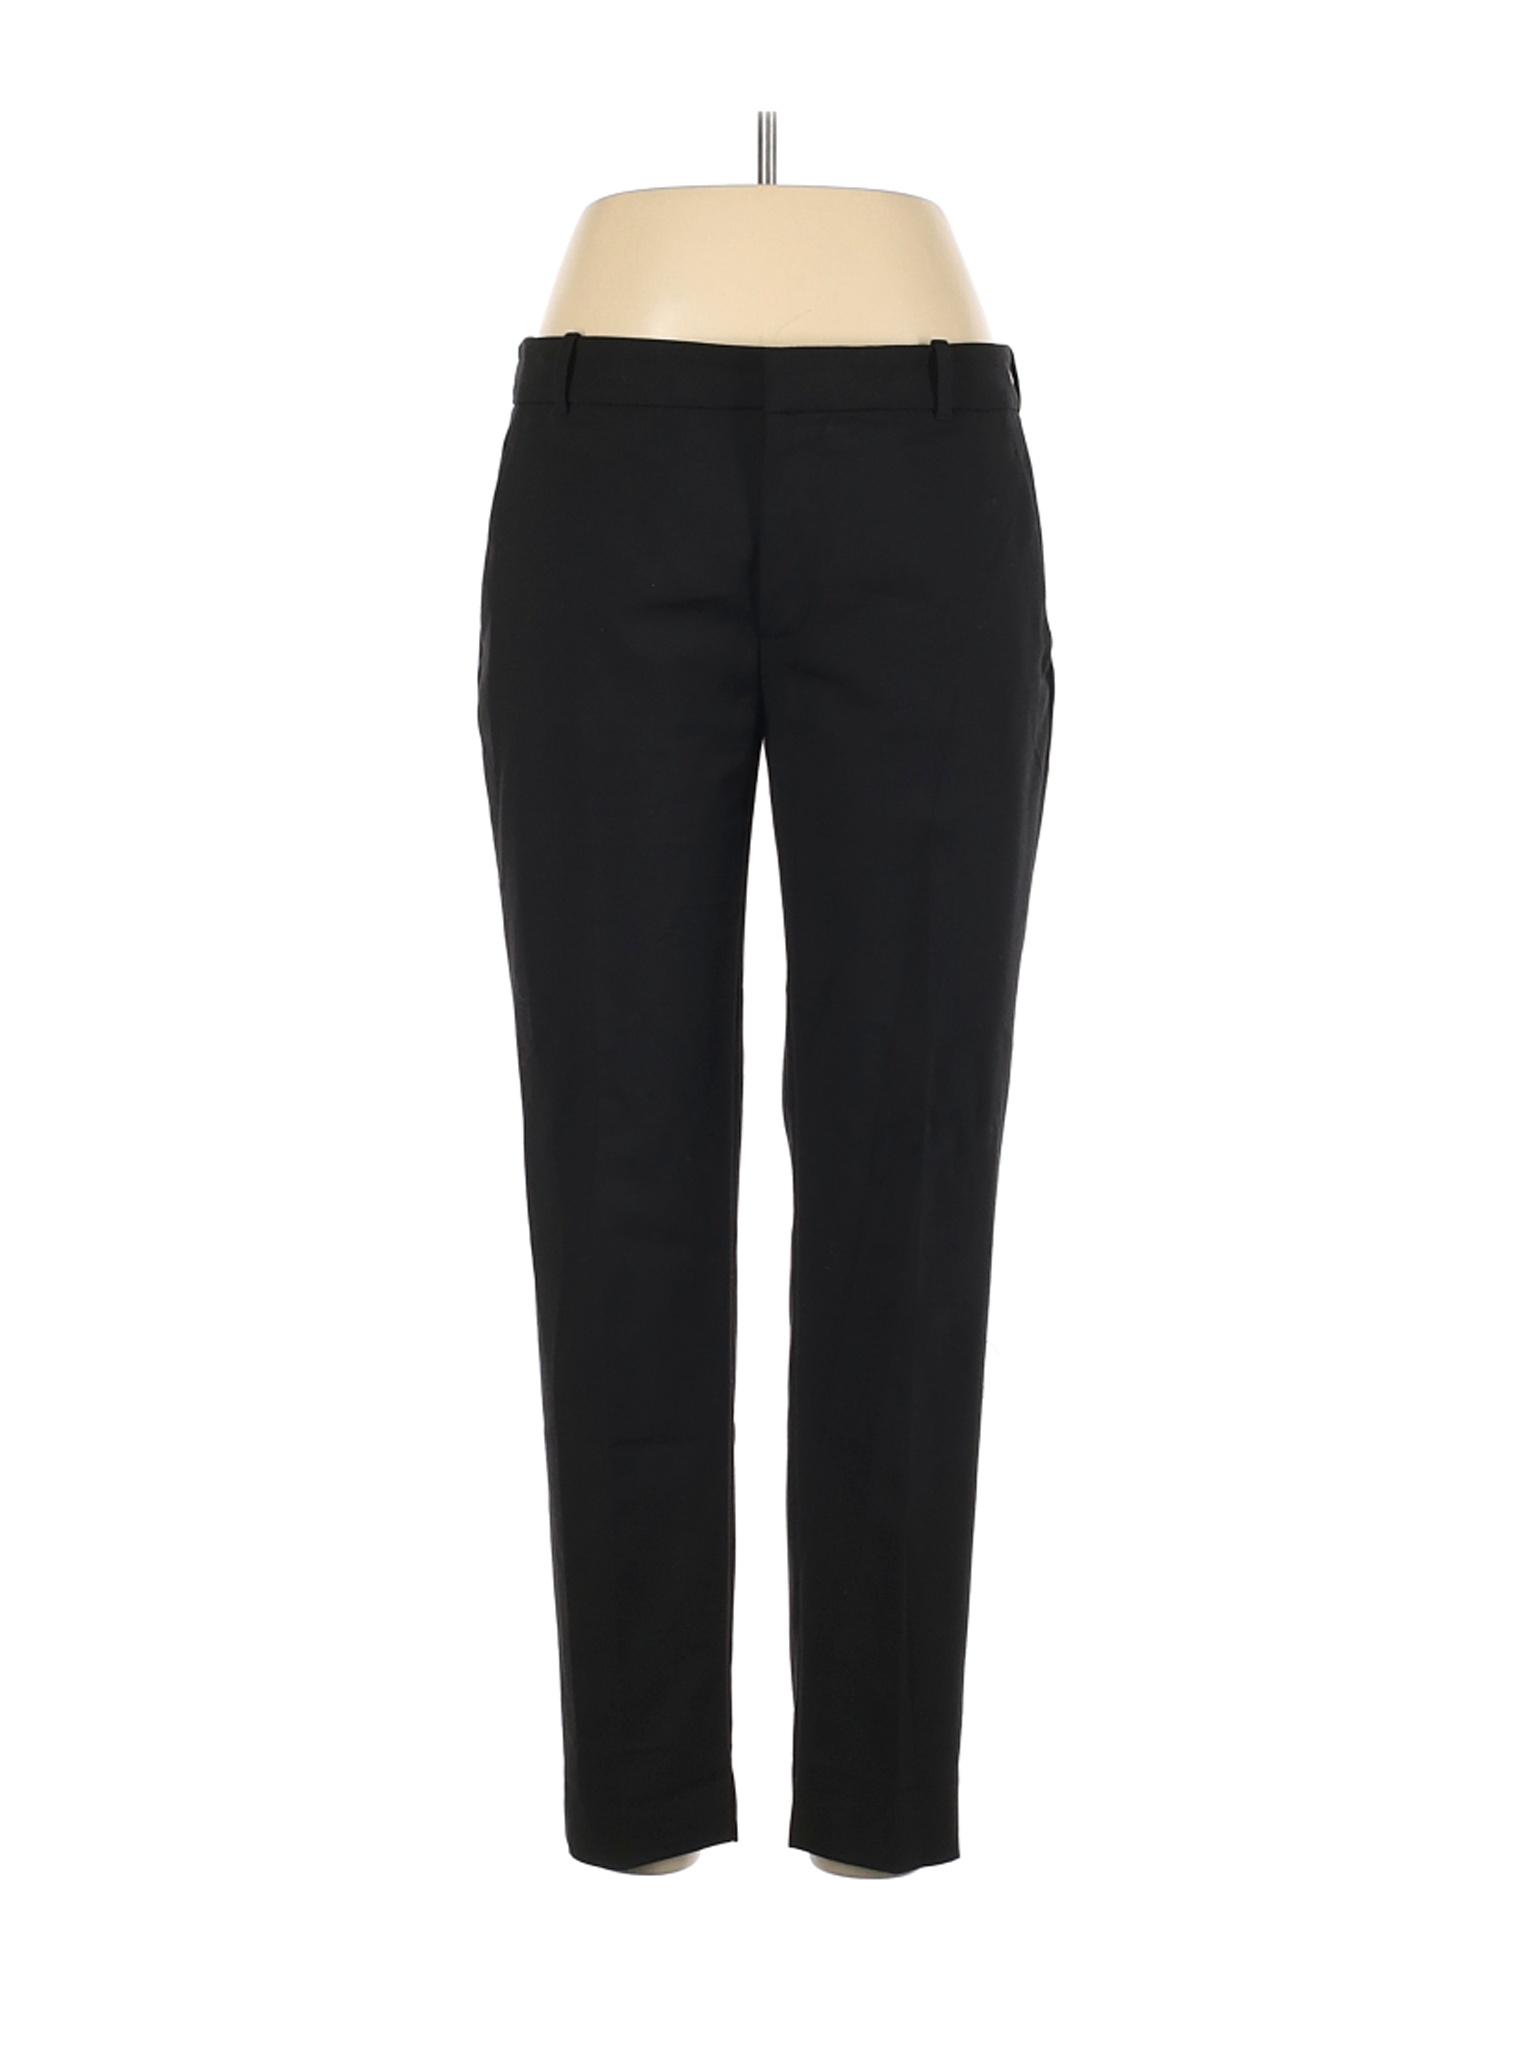 Zara Women Black Dress Pants L | eBay